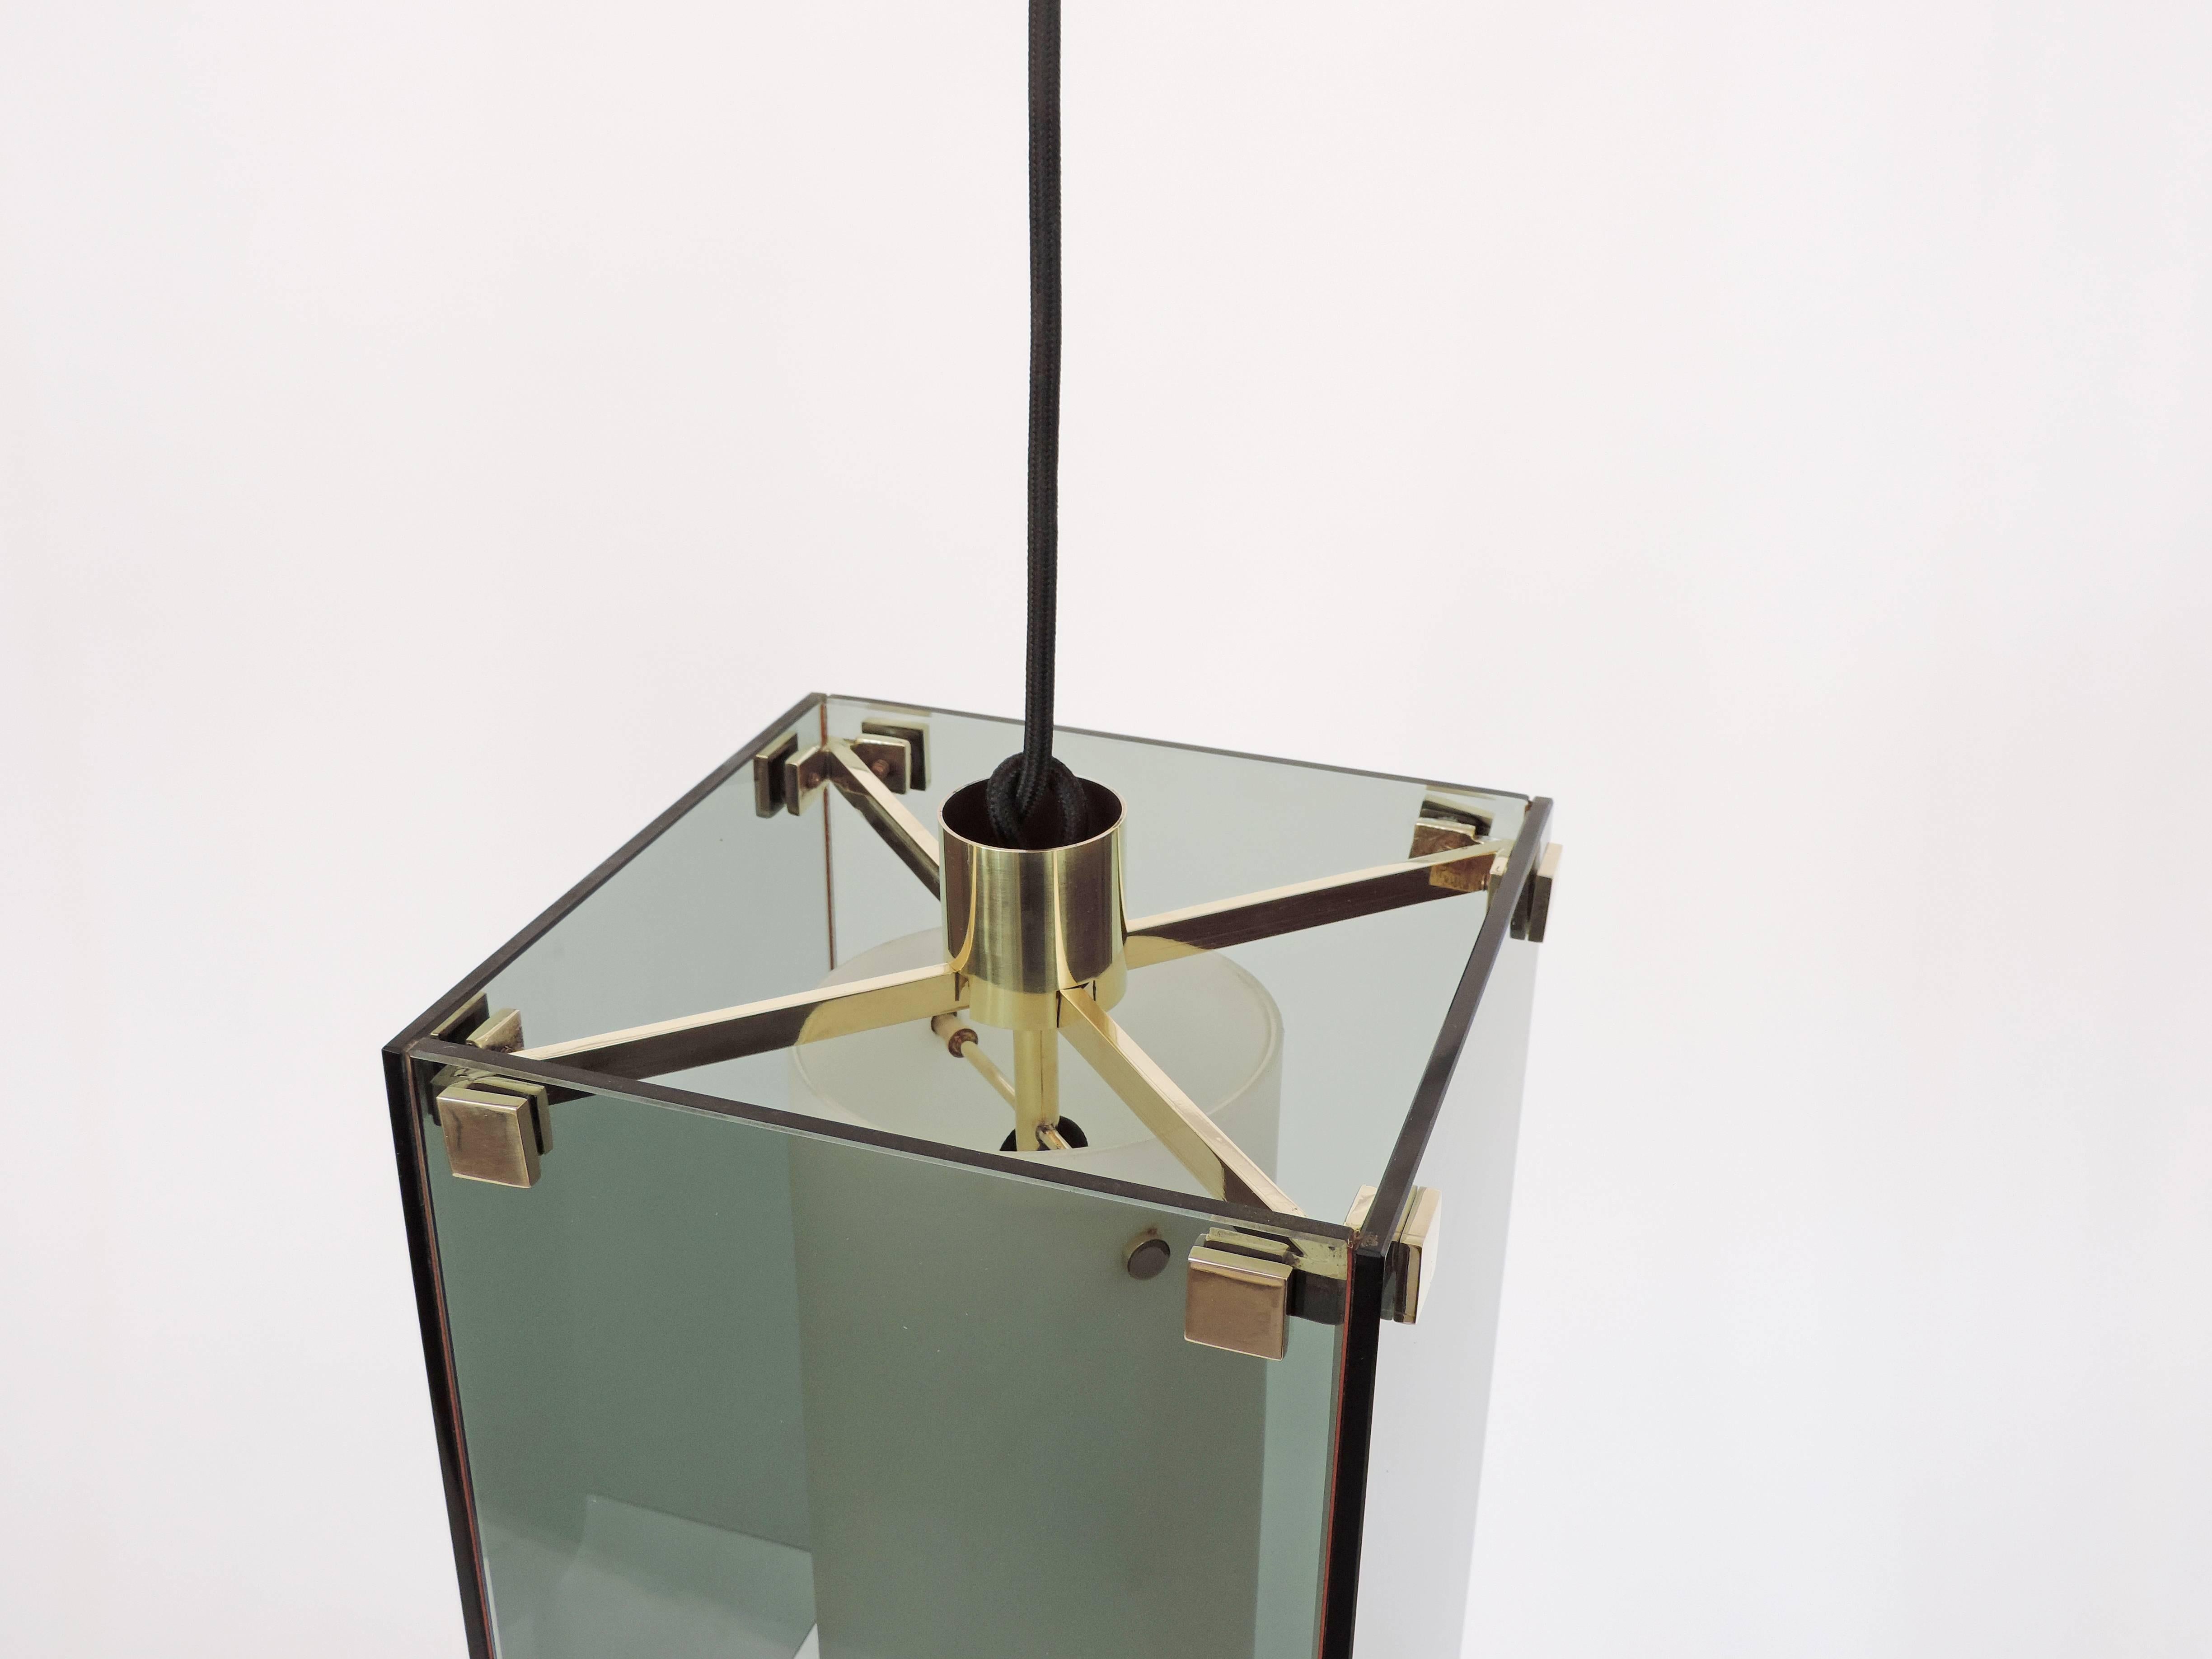 Splendid Max Ingrand mod. 2211 ceiling lamp for Fontana Arte.
Fully repolished brass.